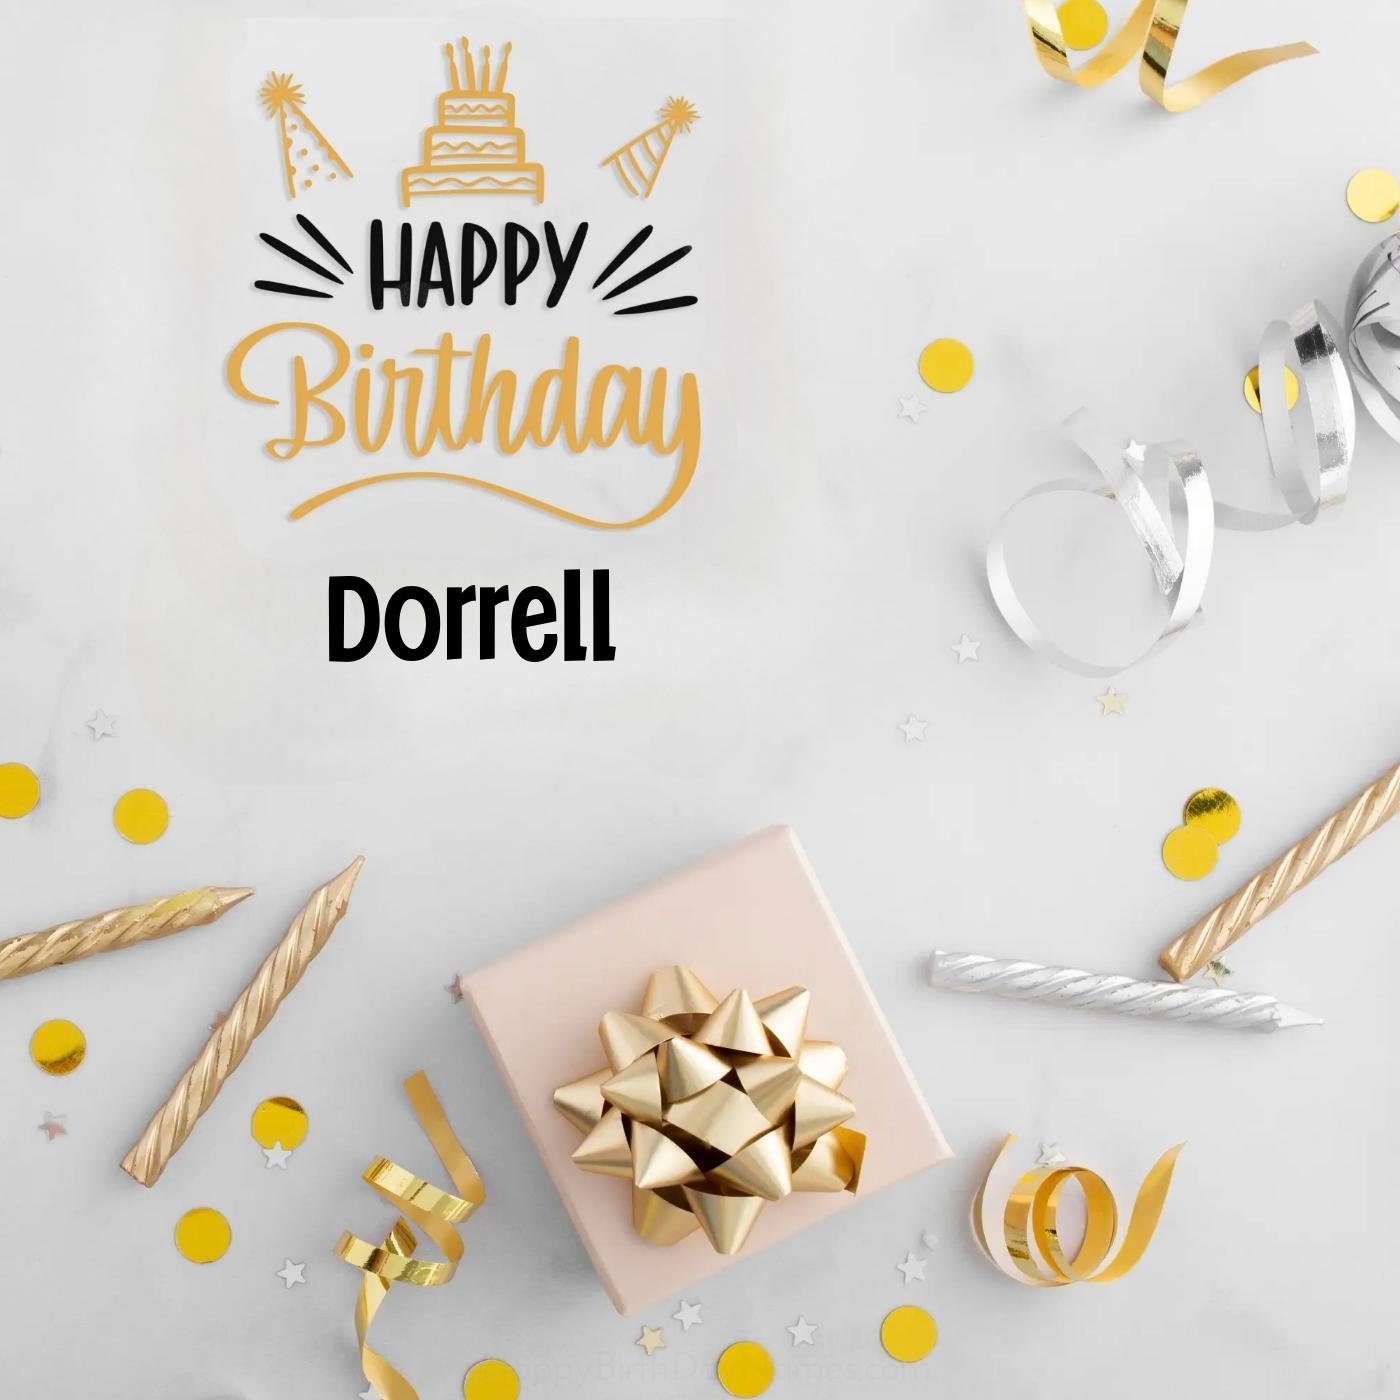 Happy Birthday Dorrell Golden Assortment Card